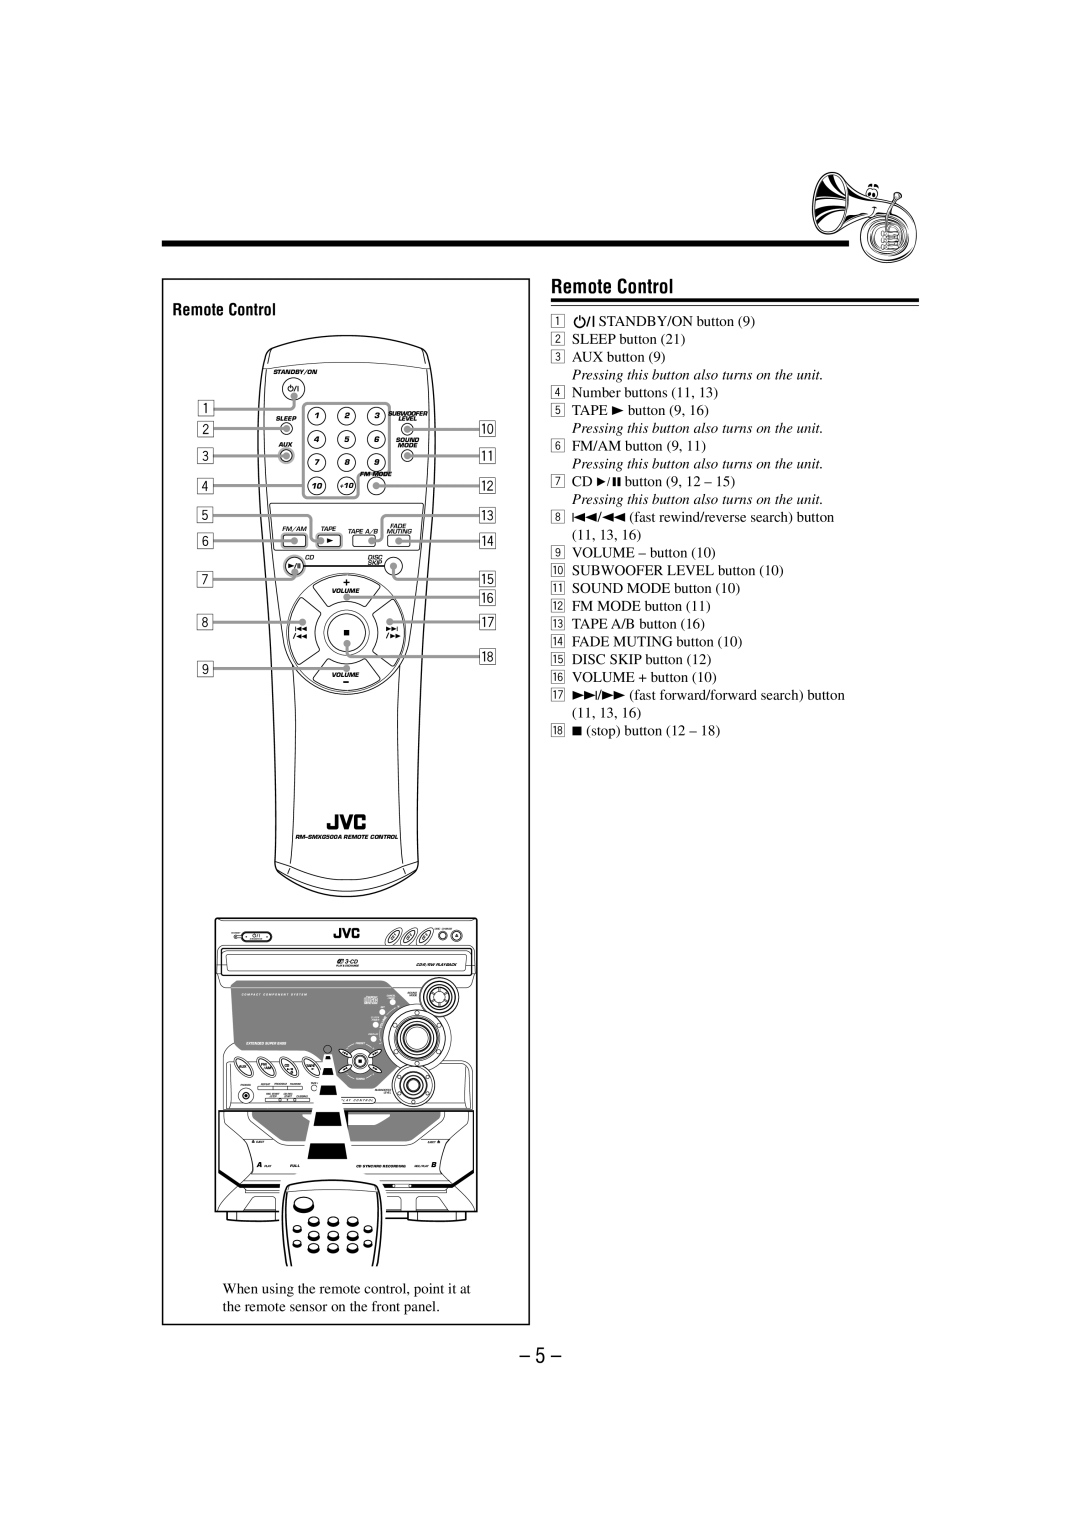 JVC MX-GT700 manual 5, Remote Control 